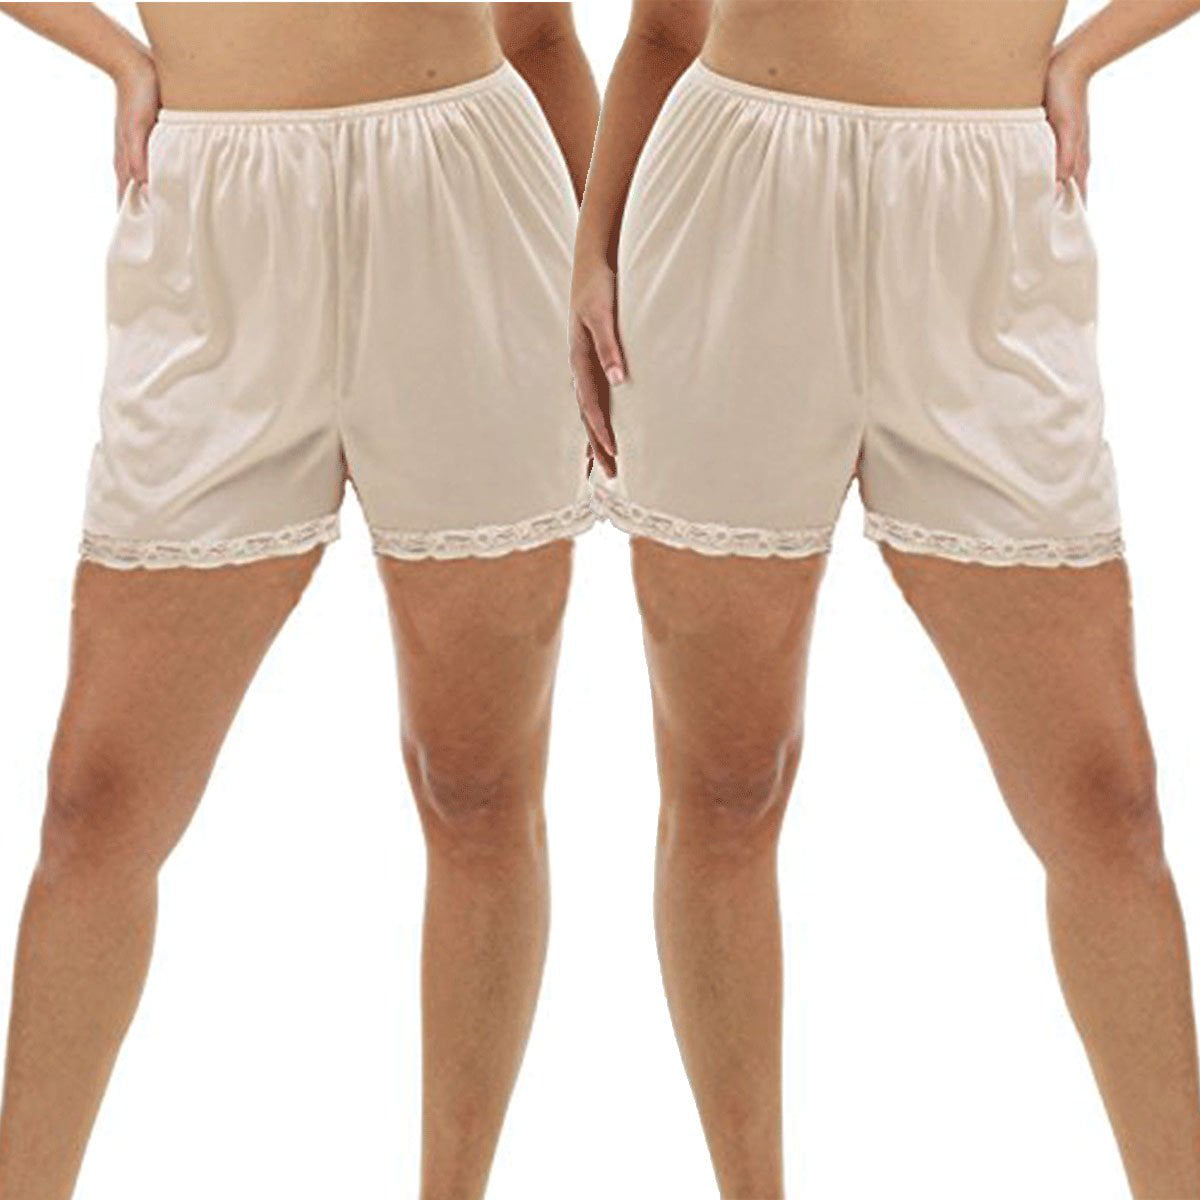 Under Moments - Women's Pettipants Cotton Culotte Bloomers Split Skirt ...